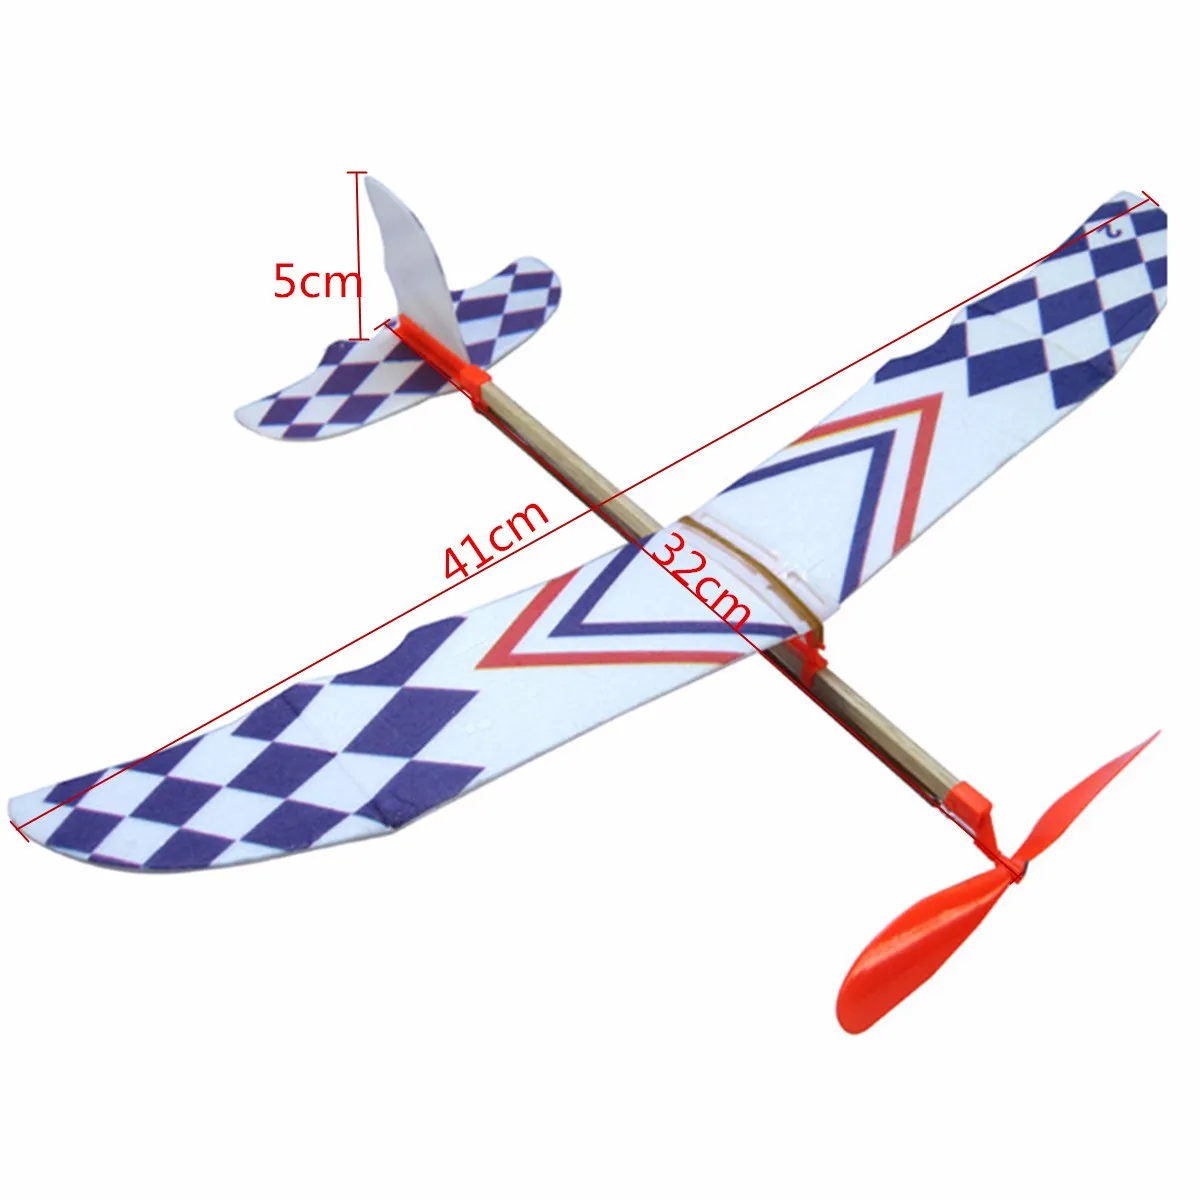 1X Foam Elastic Powered Glider Plane Thunderbird Kit Aircraft-Toy！ H7Q2 